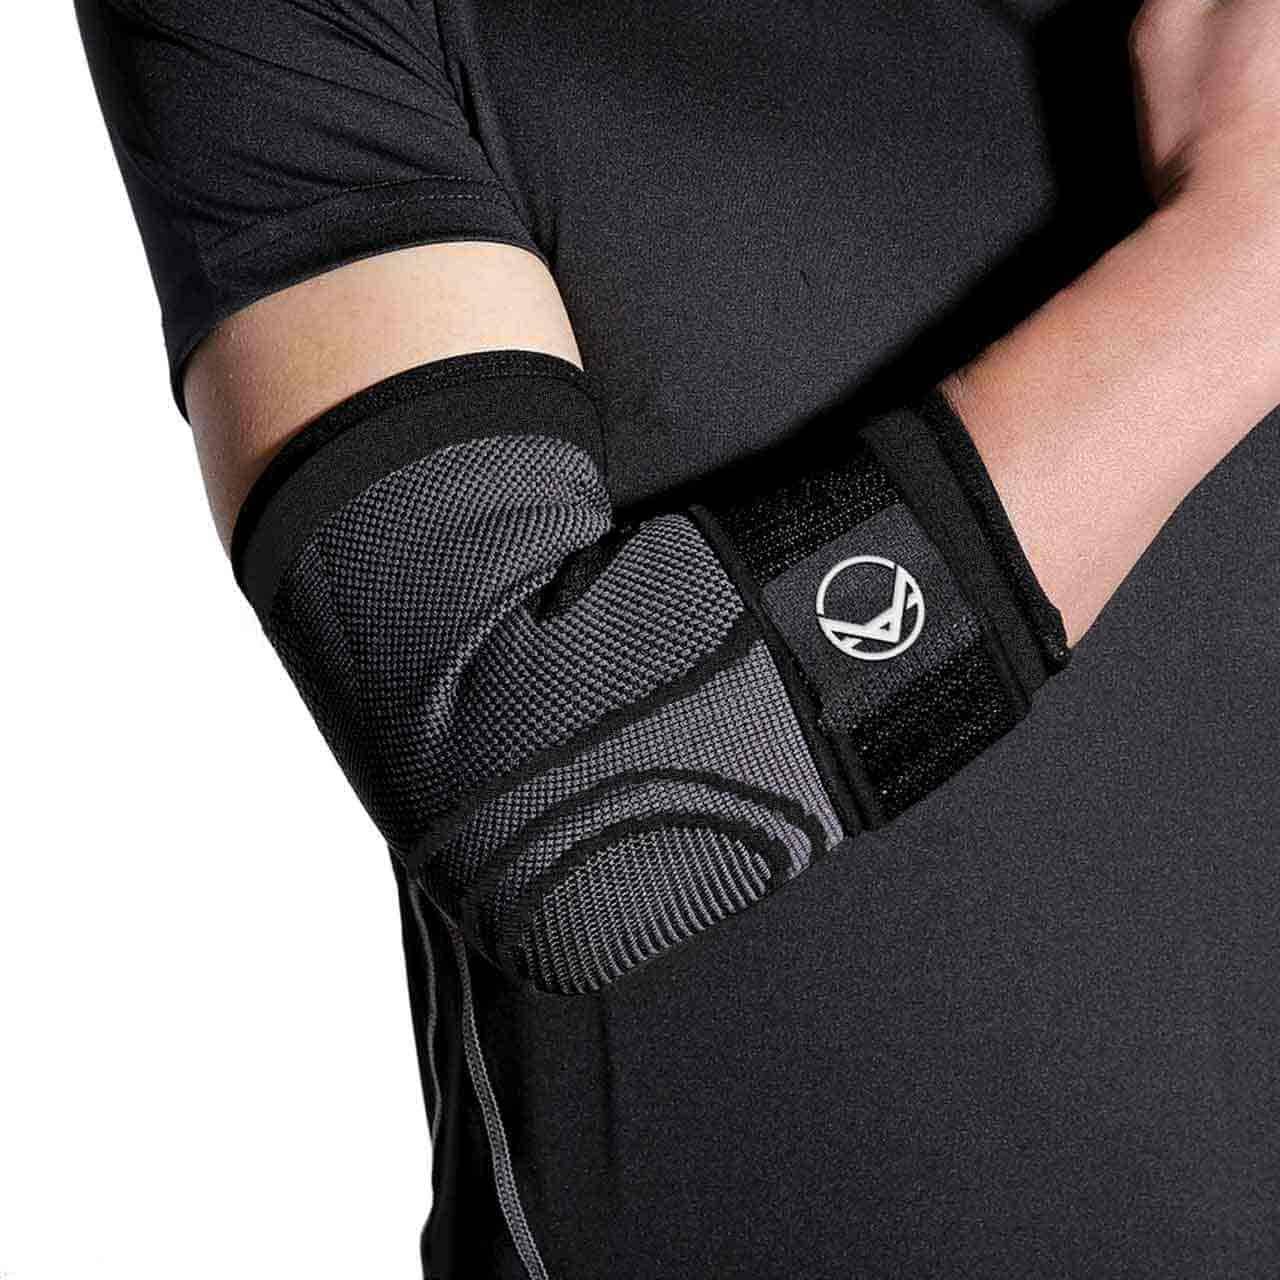 Koprez elbow compression sleeve for men and women. effective elbow pain compression sleeve against tendonitis, bursitis, and tennis elbow